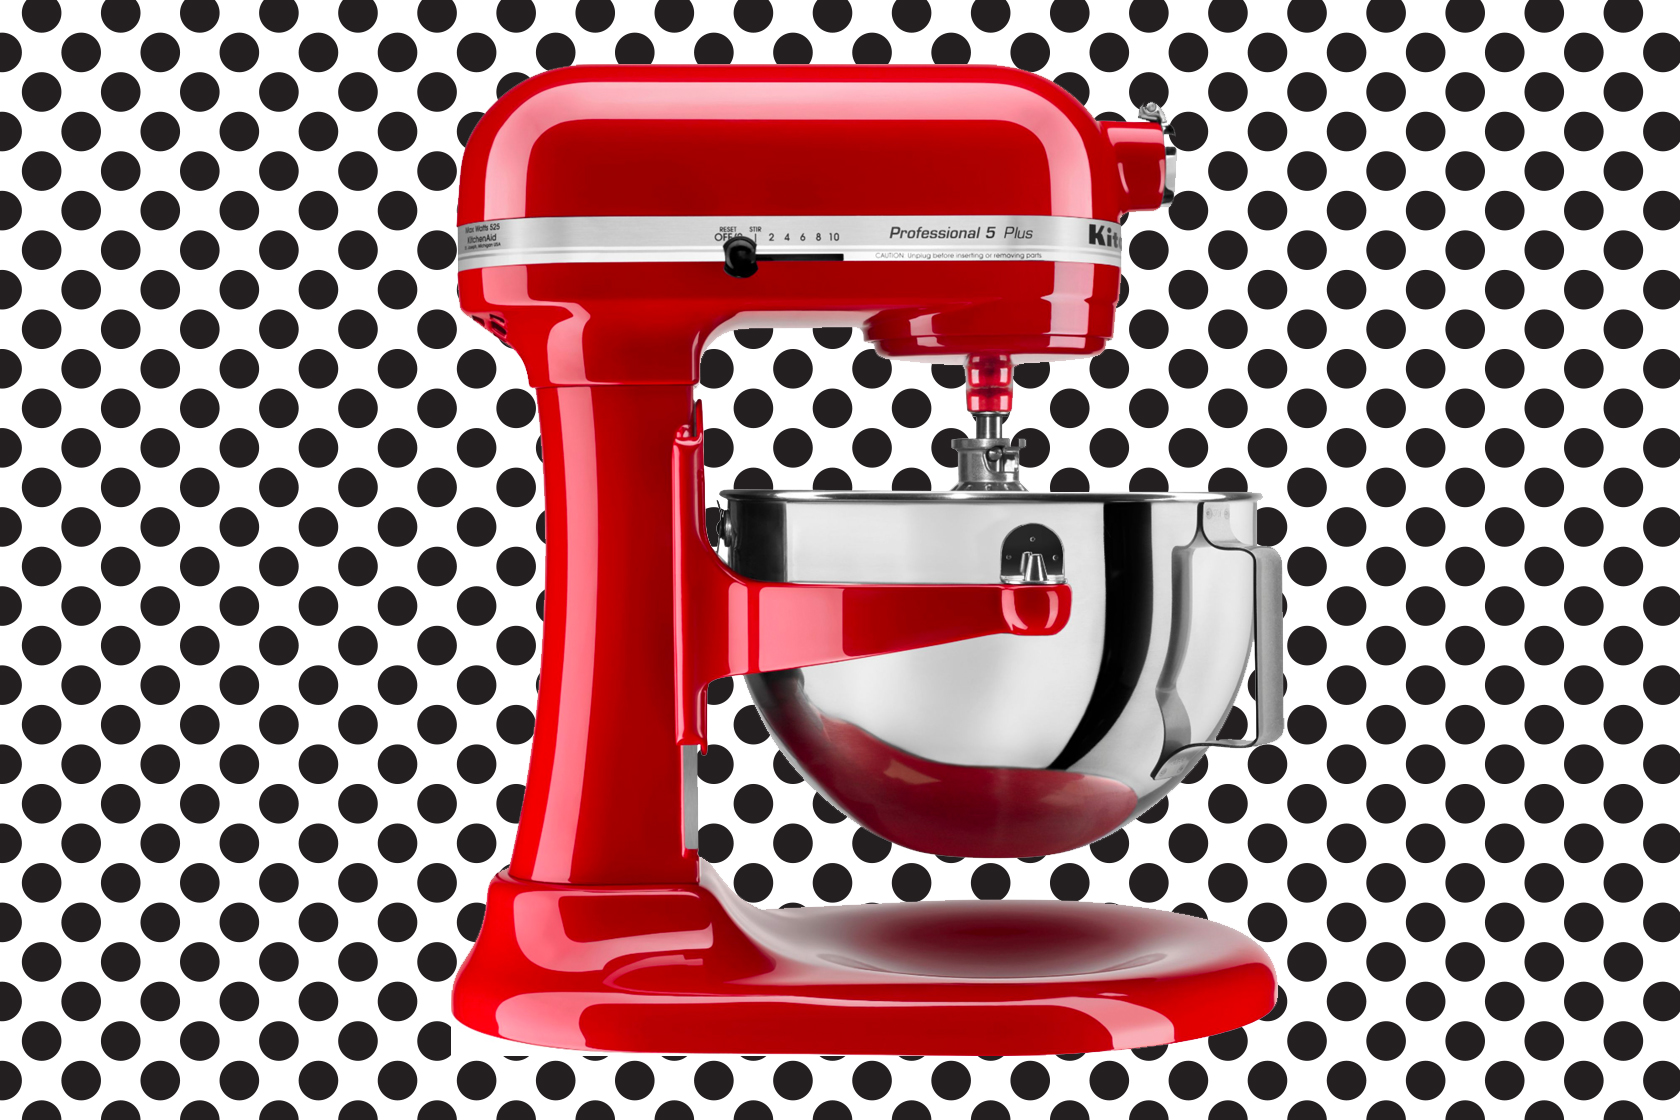 KitchenAid Professional 5 Plus Series 5 Qt. Stand Mixer - Empire Red